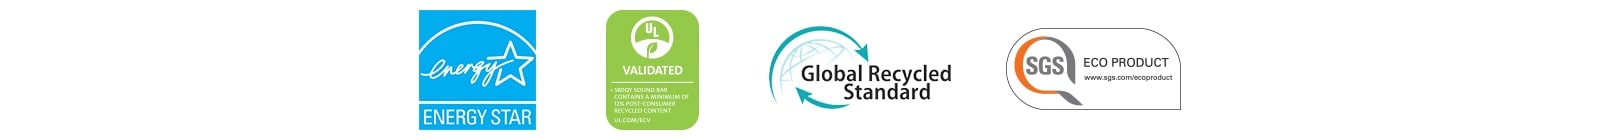 Sleva su prikazani ENERGY STAR (logotip), UL VALIDATED (logotip), Global Recycled Standard (logotip), SGS ECO PRODUCT (logotip).